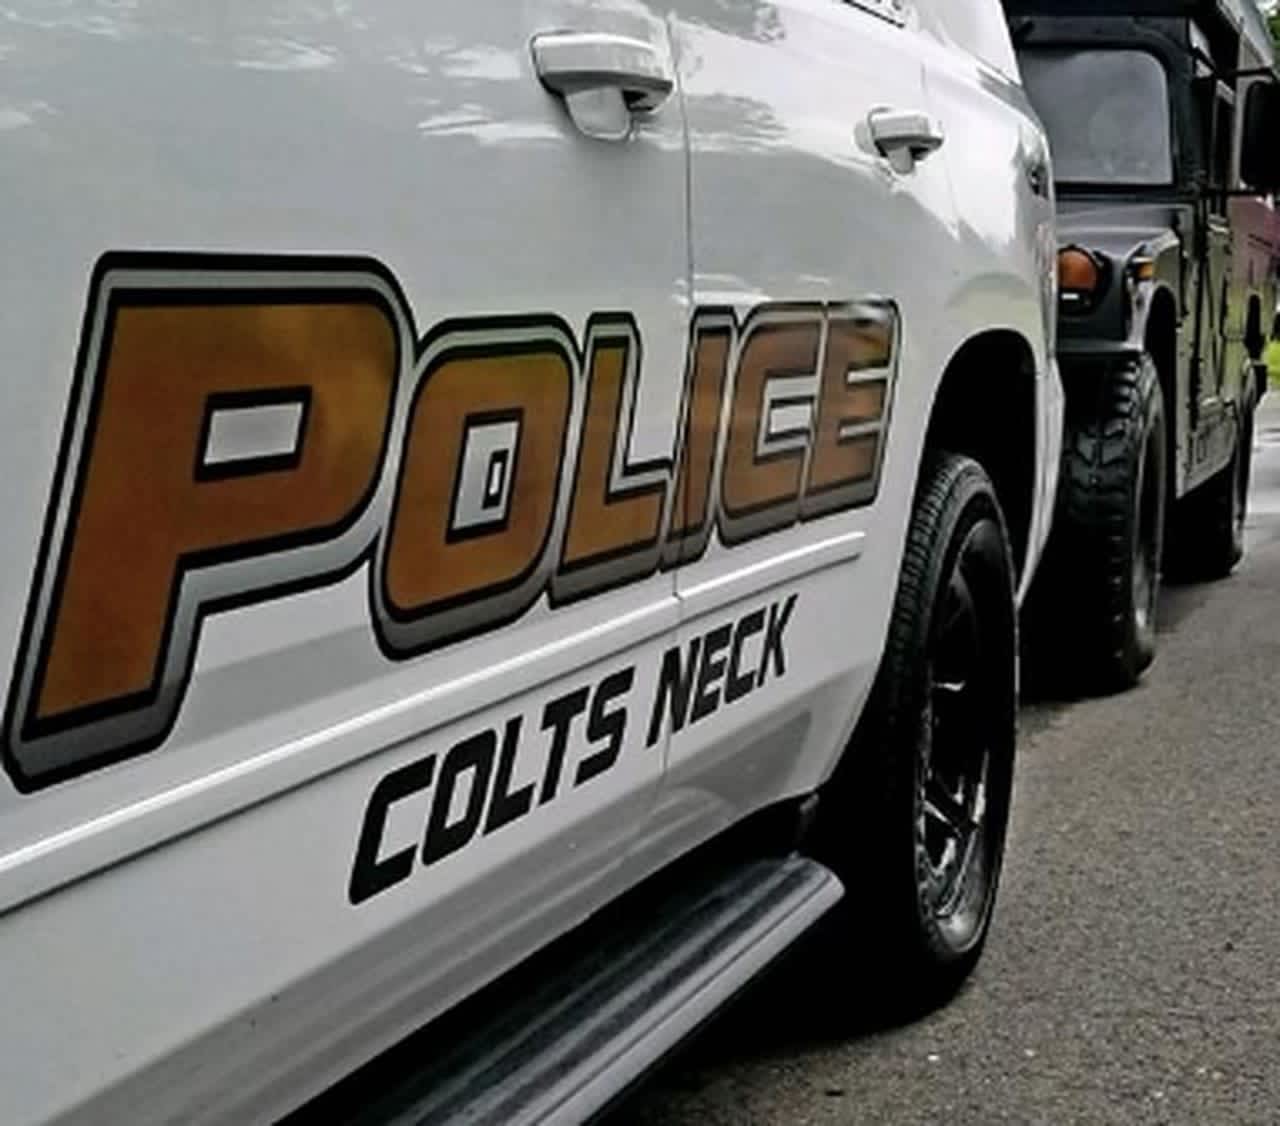 Colts Neck police.